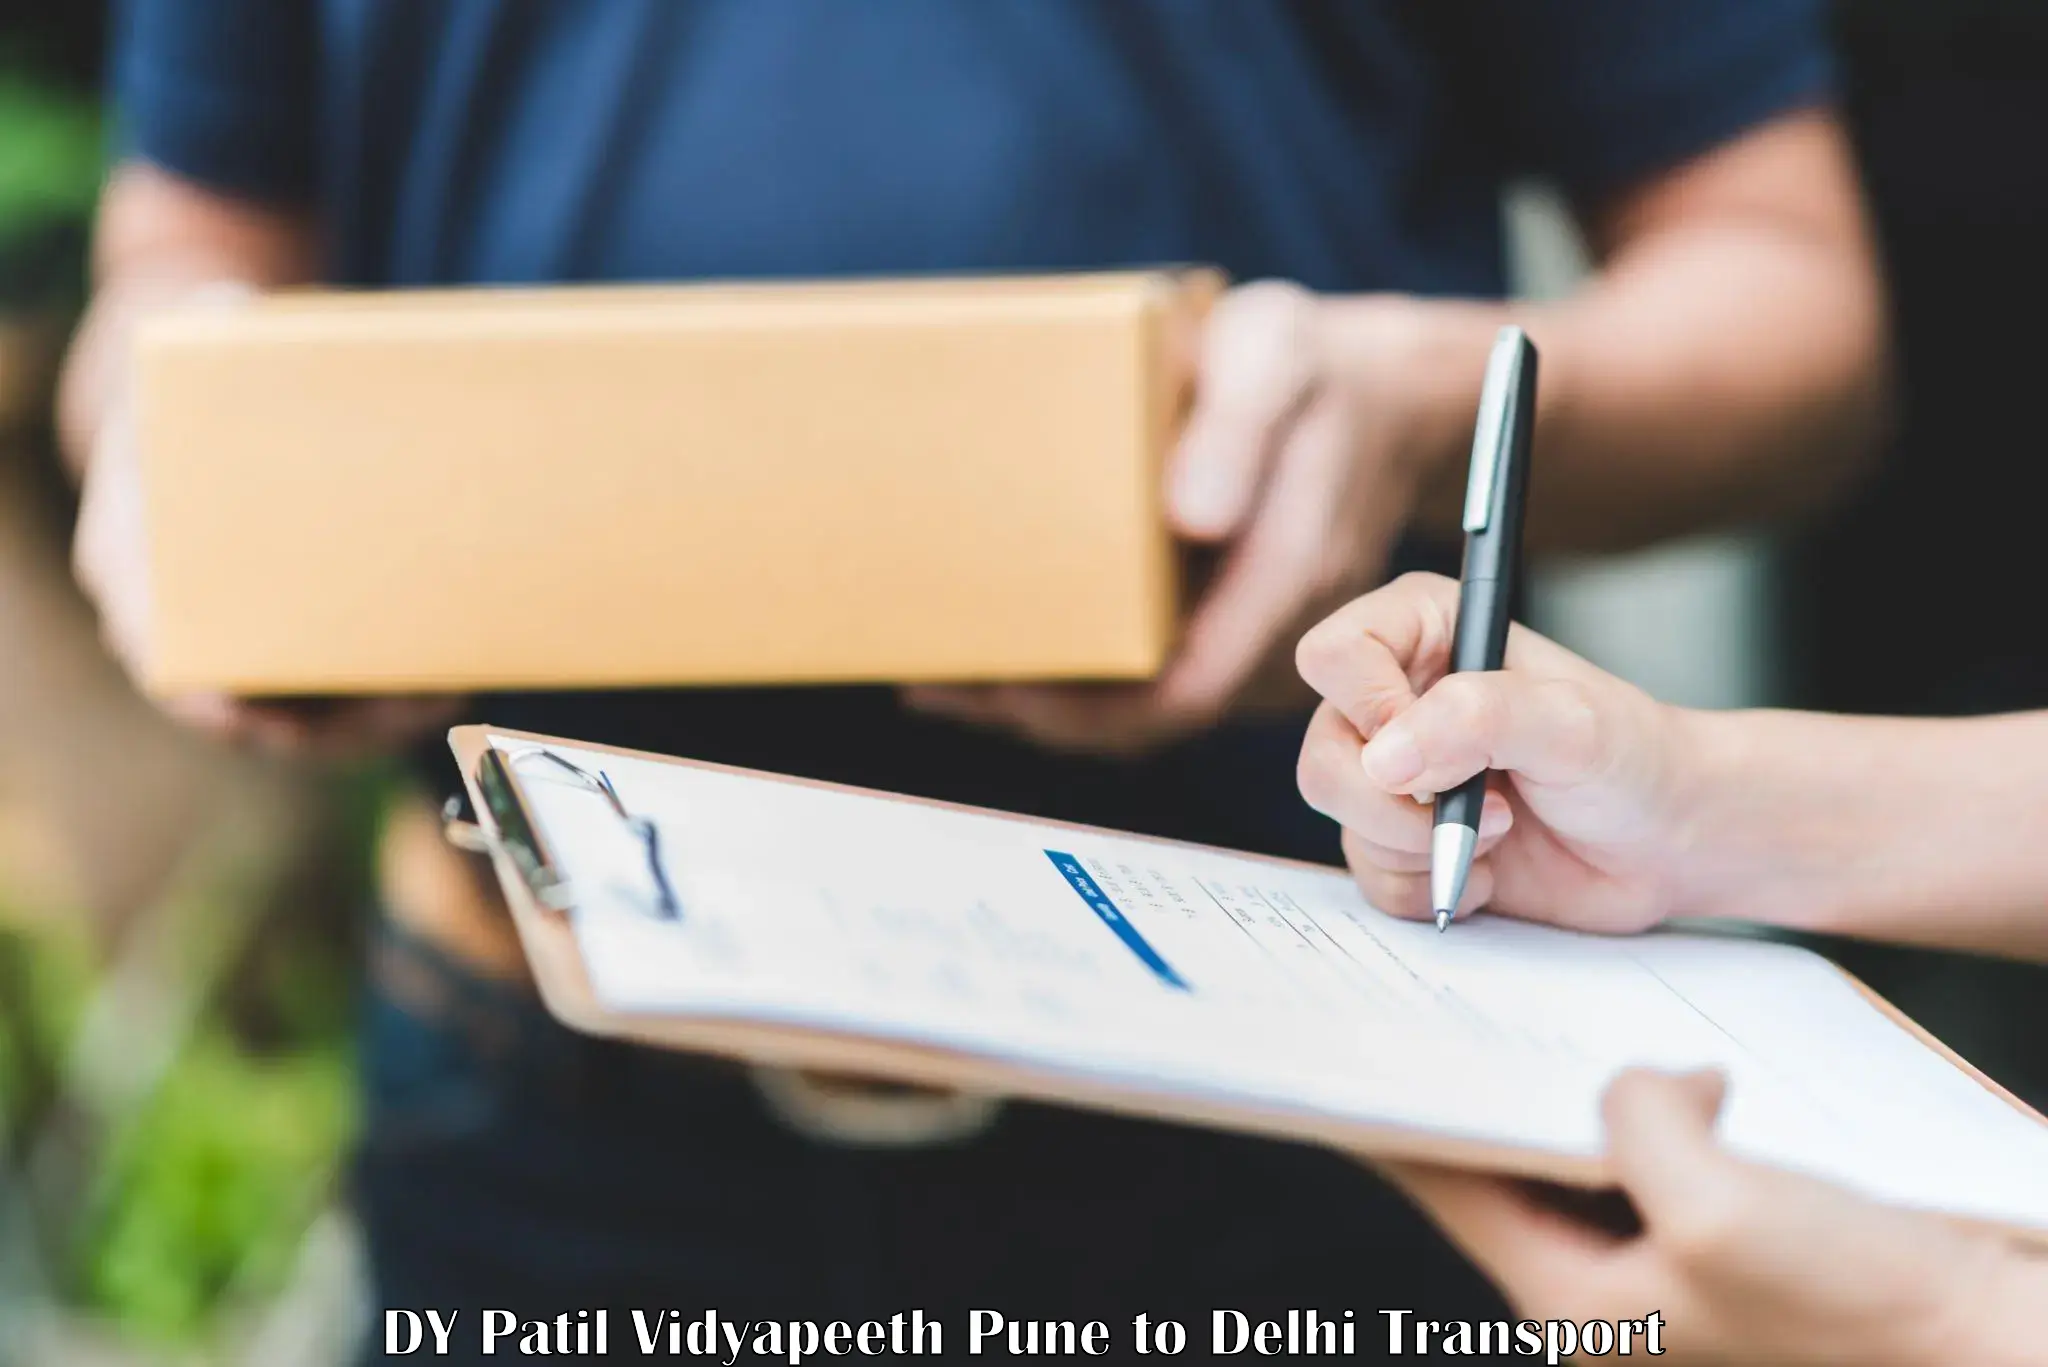 Daily transport service DY Patil Vidyapeeth Pune to Delhi